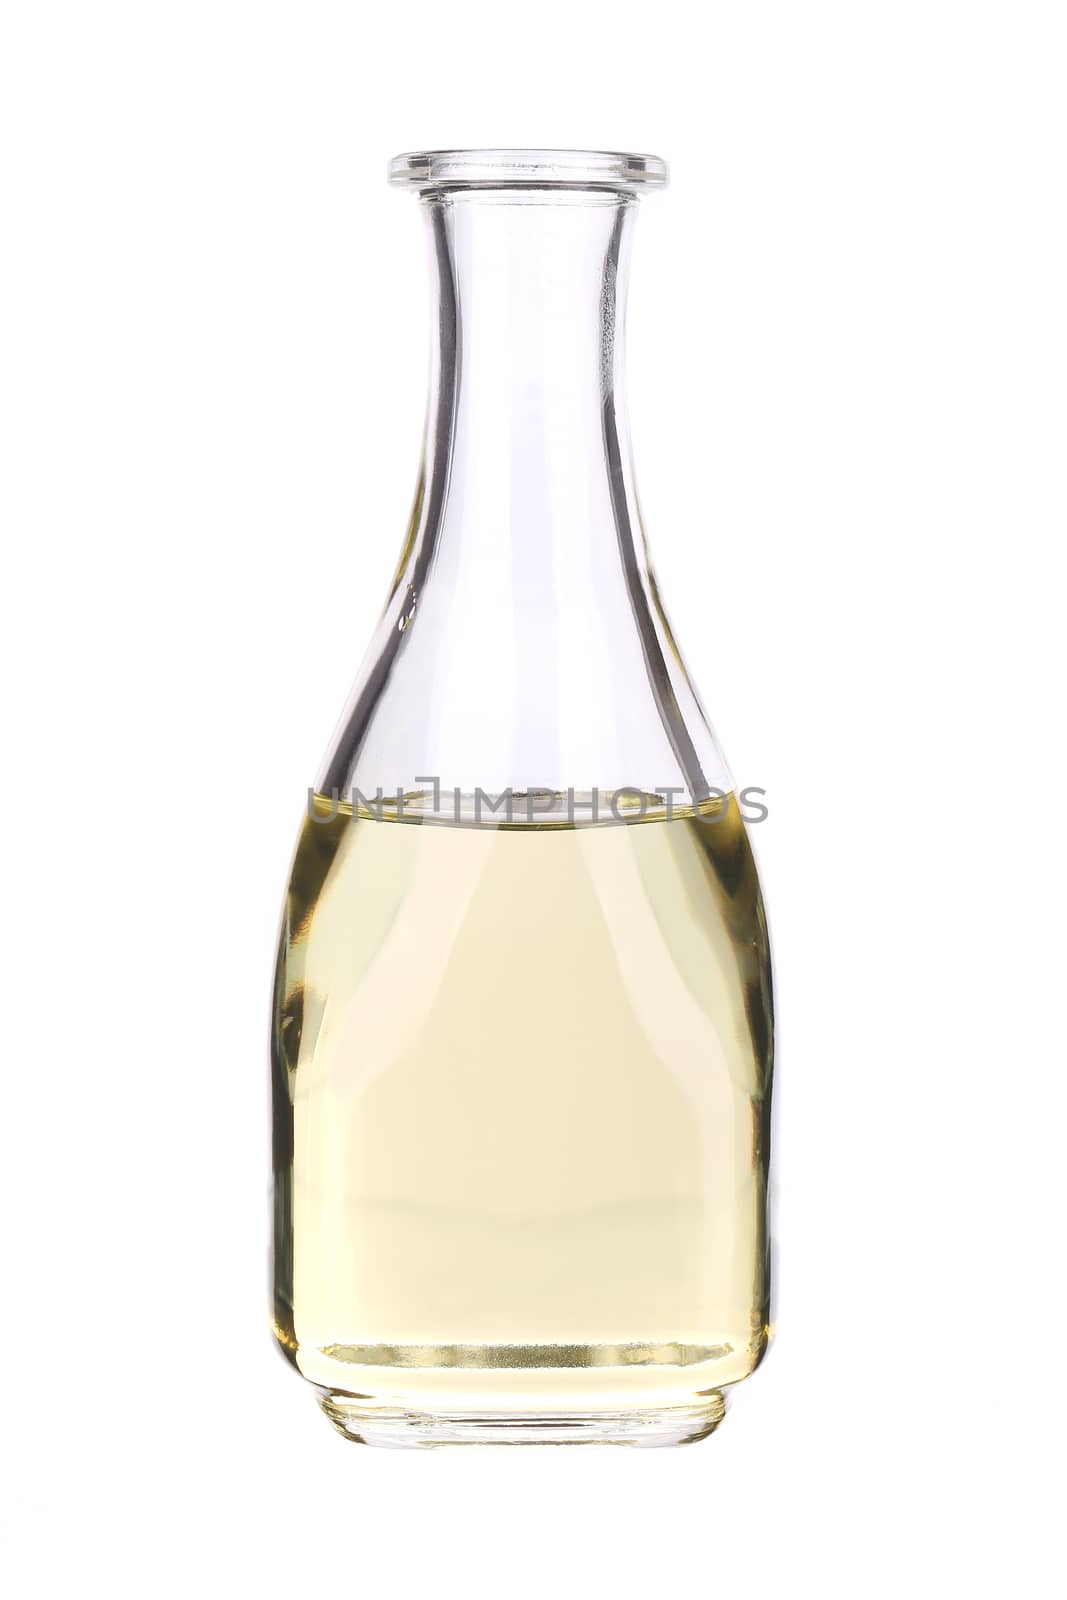 Glass bottle for oil or vinegar. by indigolotos